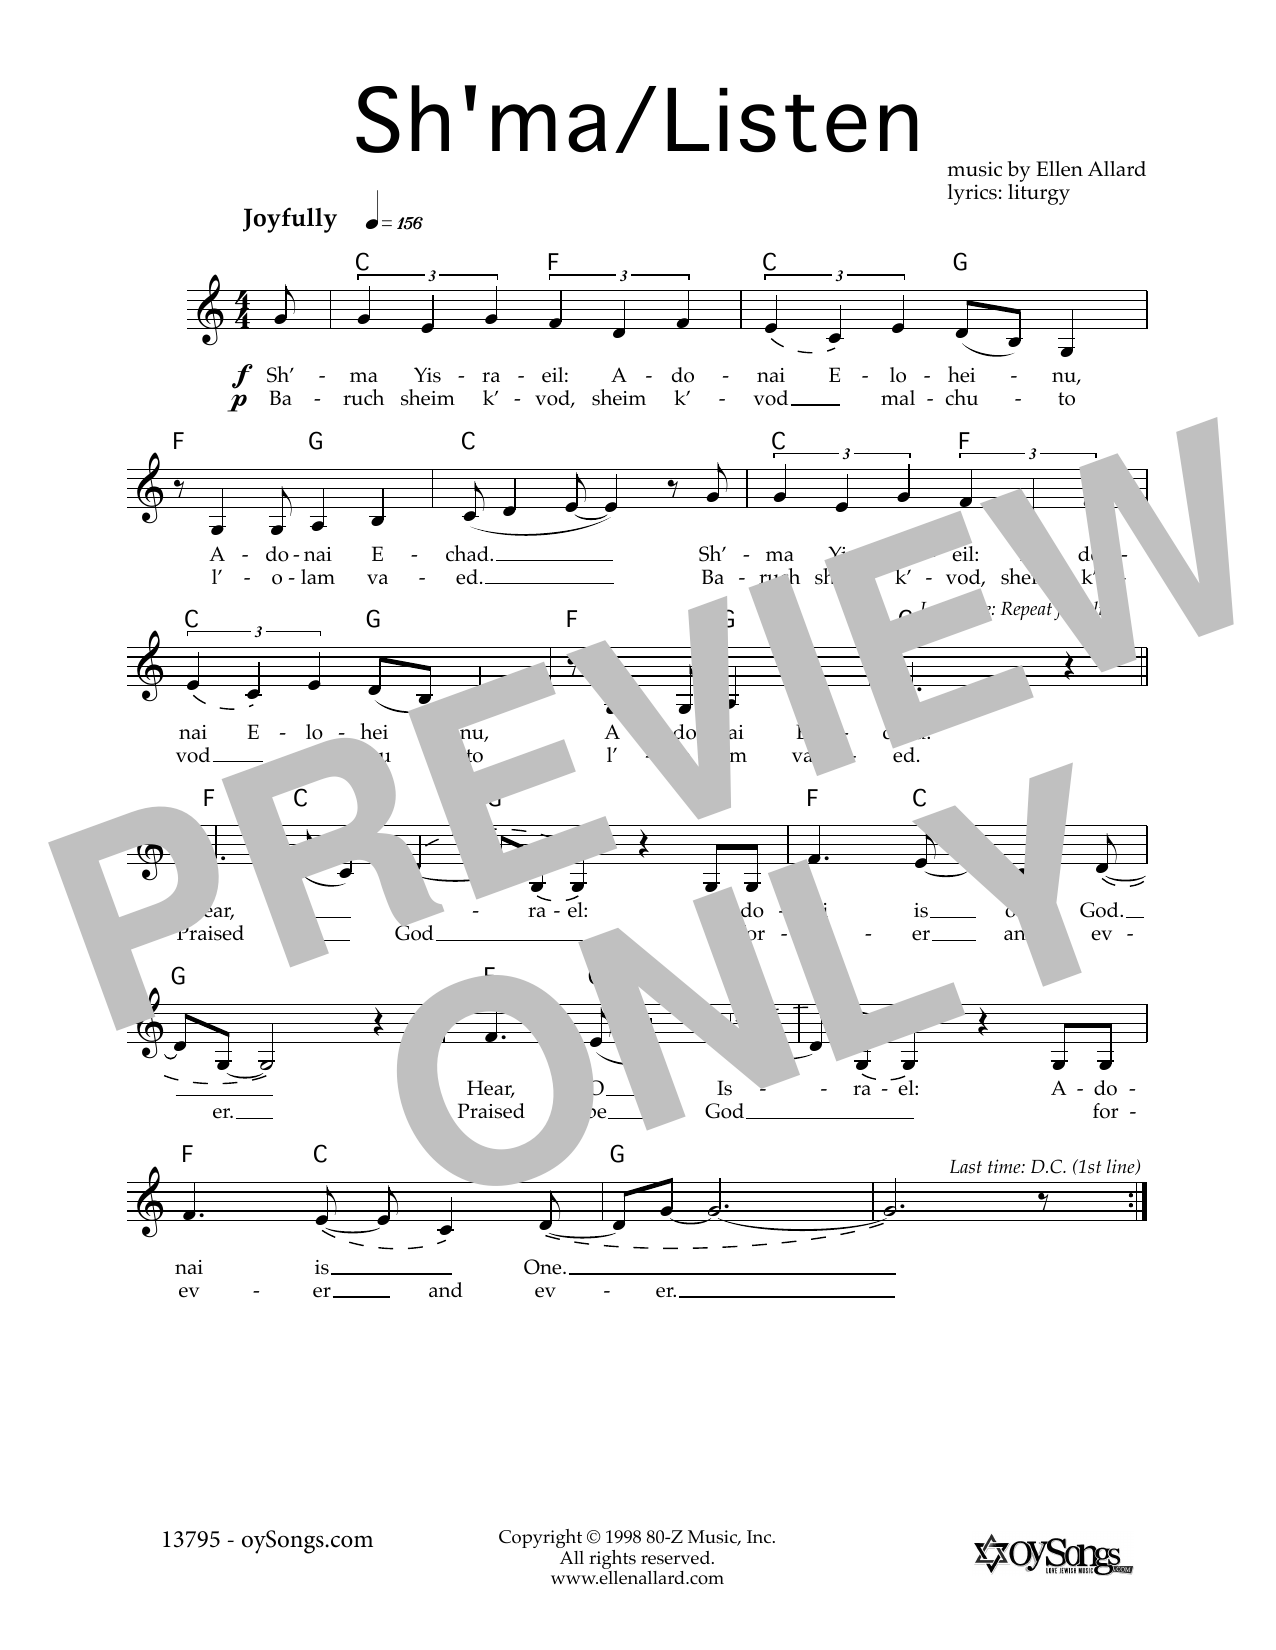 Ellen Allard Sh'ma-Listen Sheet Music Notes & Chords for Melody Line, Lyrics & Chords - Download or Print PDF